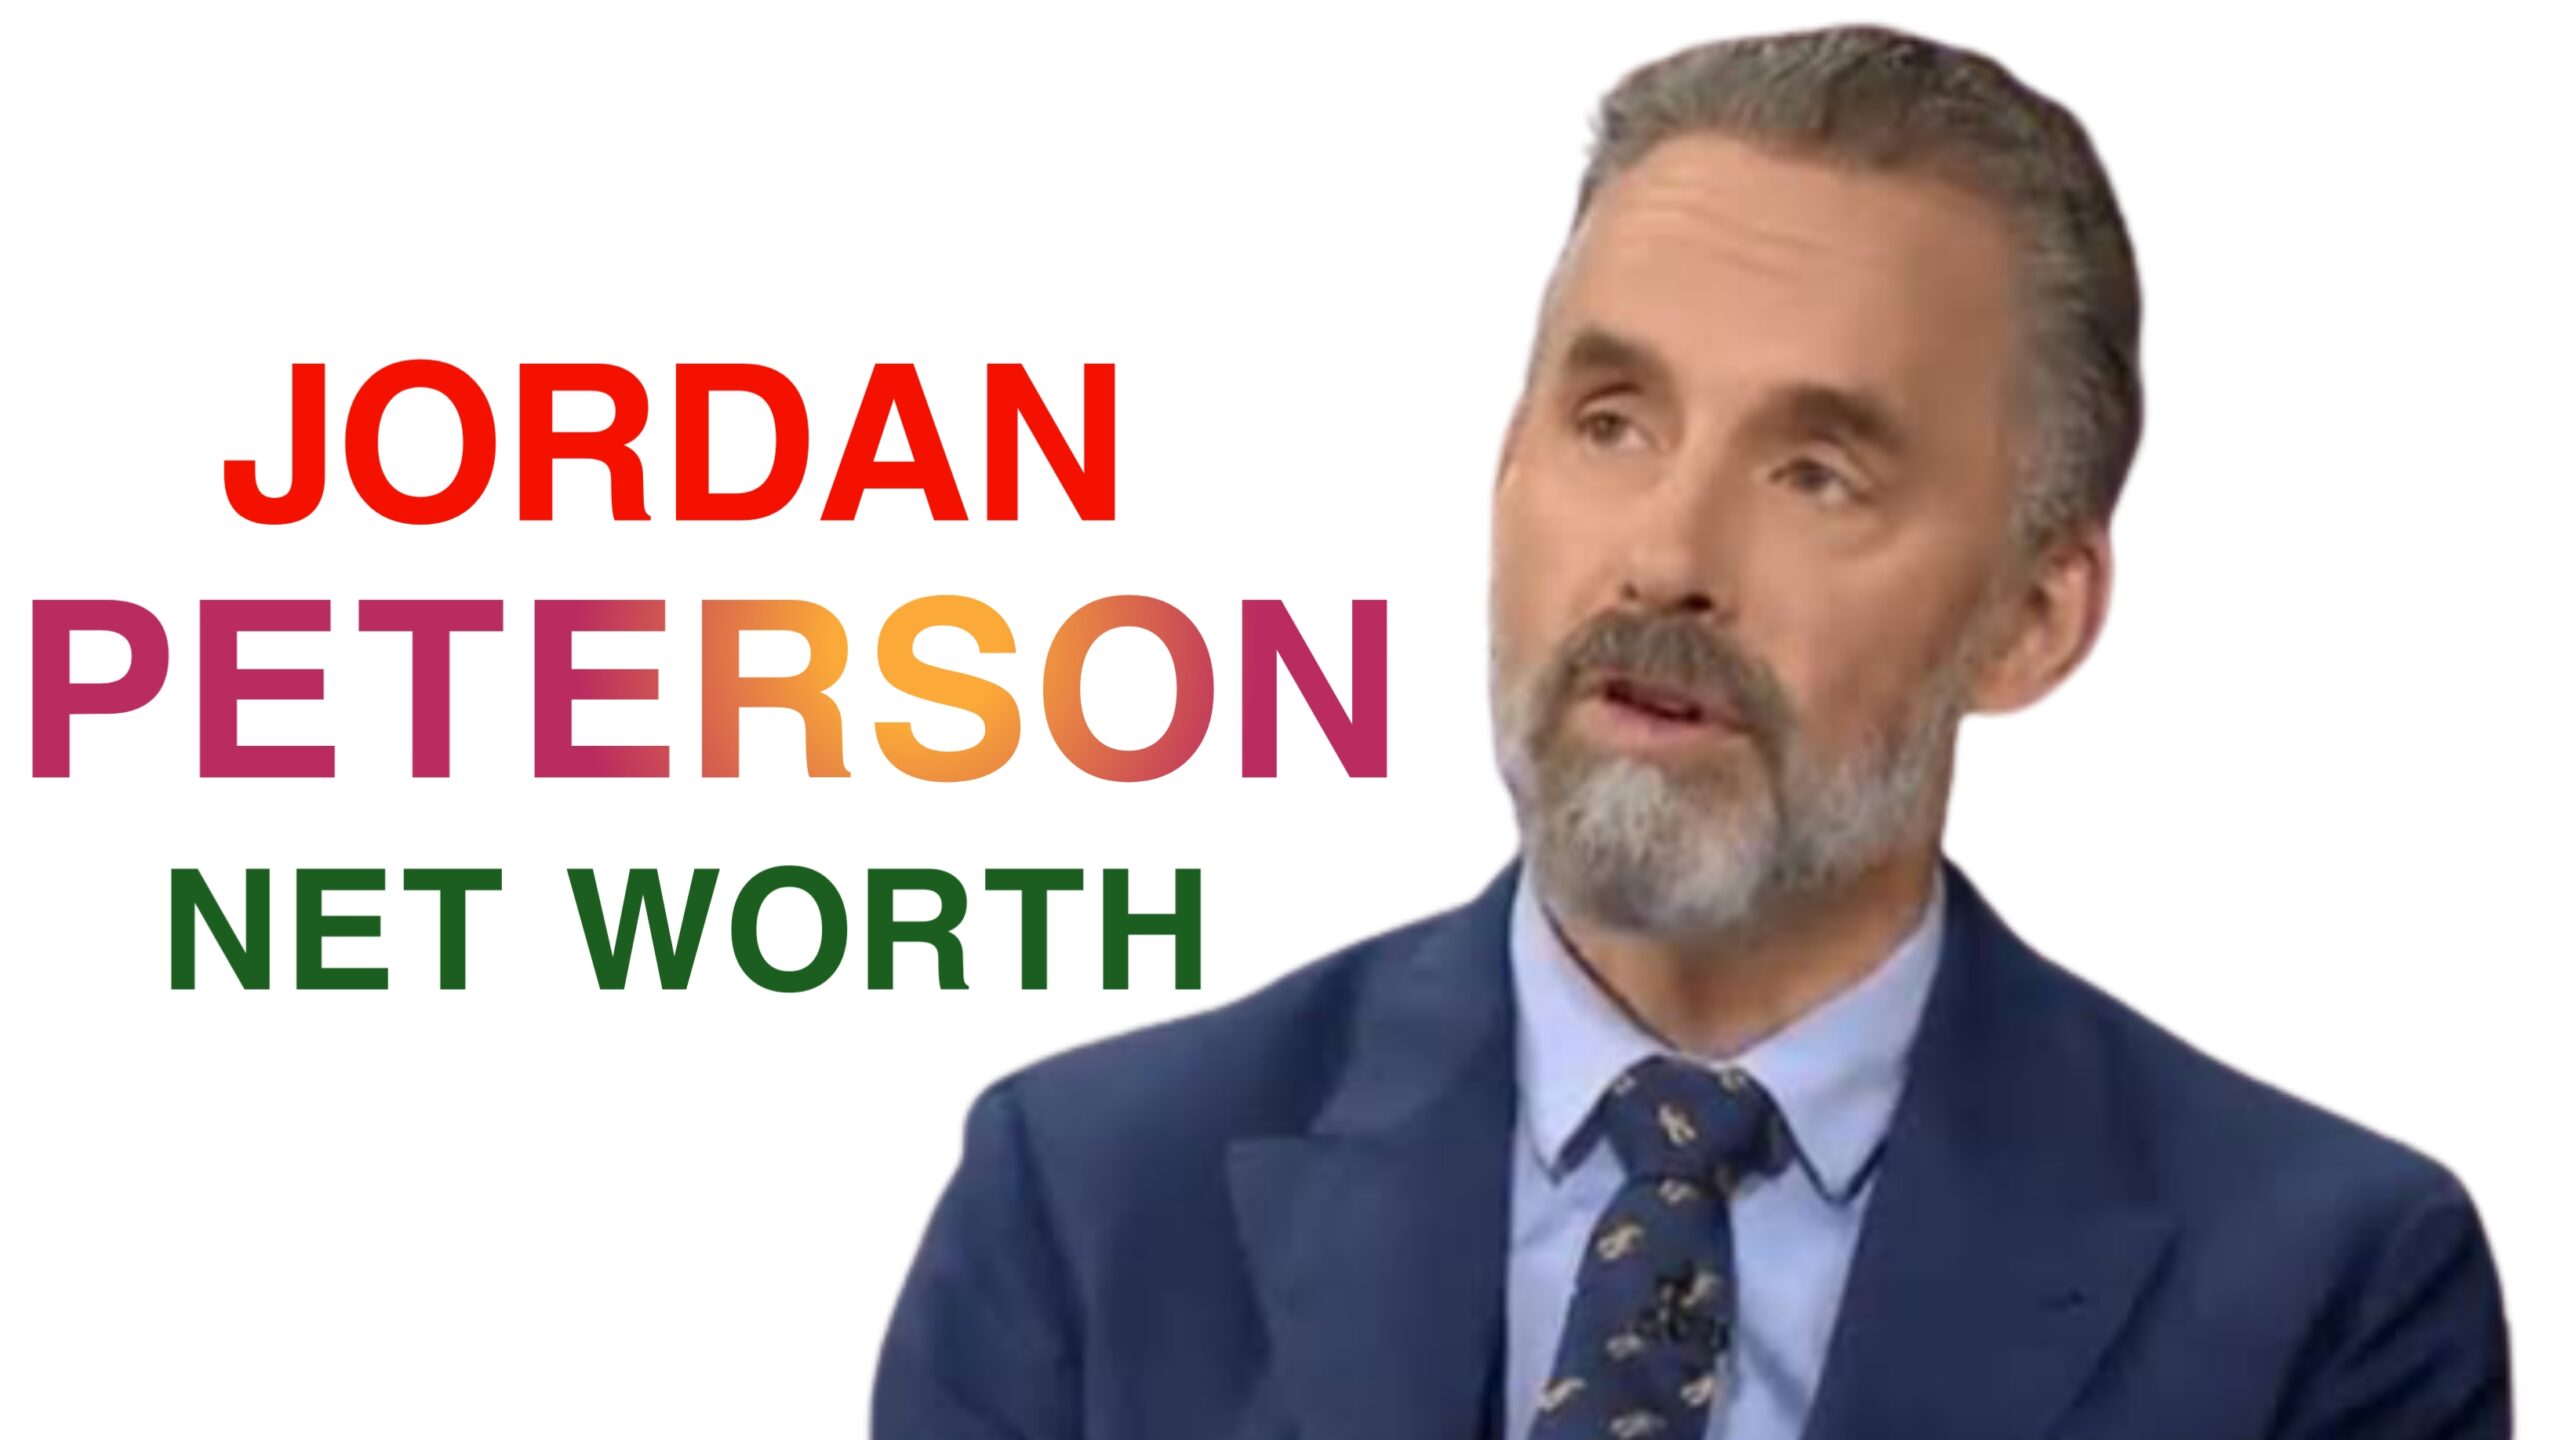 Jordan peterson net worth